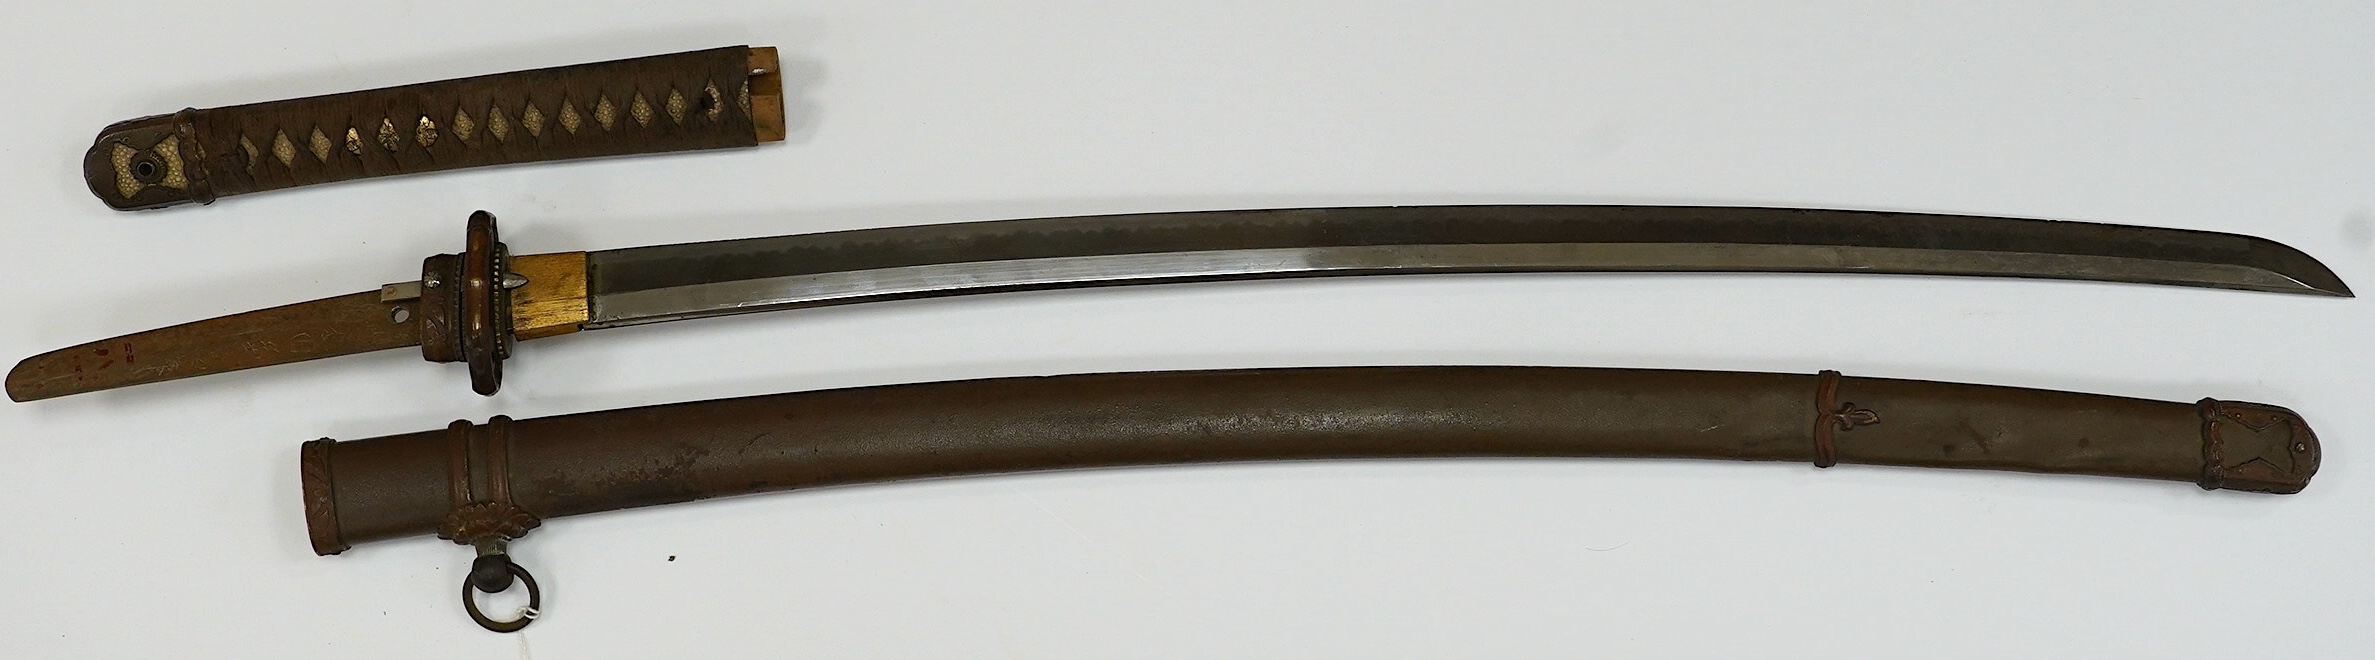 A Japanese WWII army officer’s sword Katana, blade 65cm, signed tang, retaining good polish, in shin gunto mounts. Condition - good